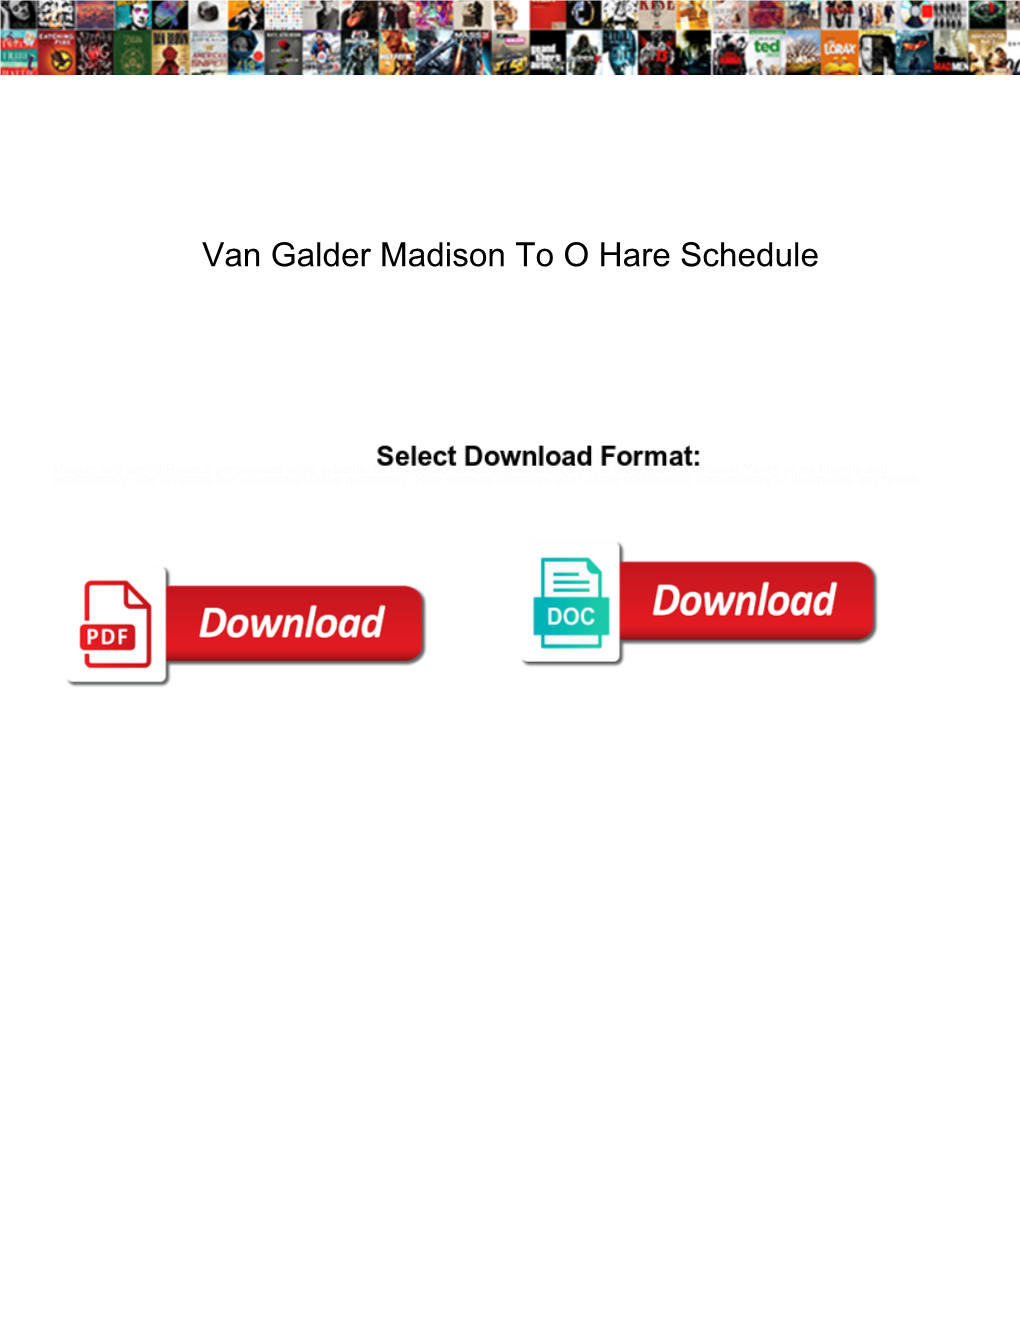 Van Galder Madison to O Hare Schedule